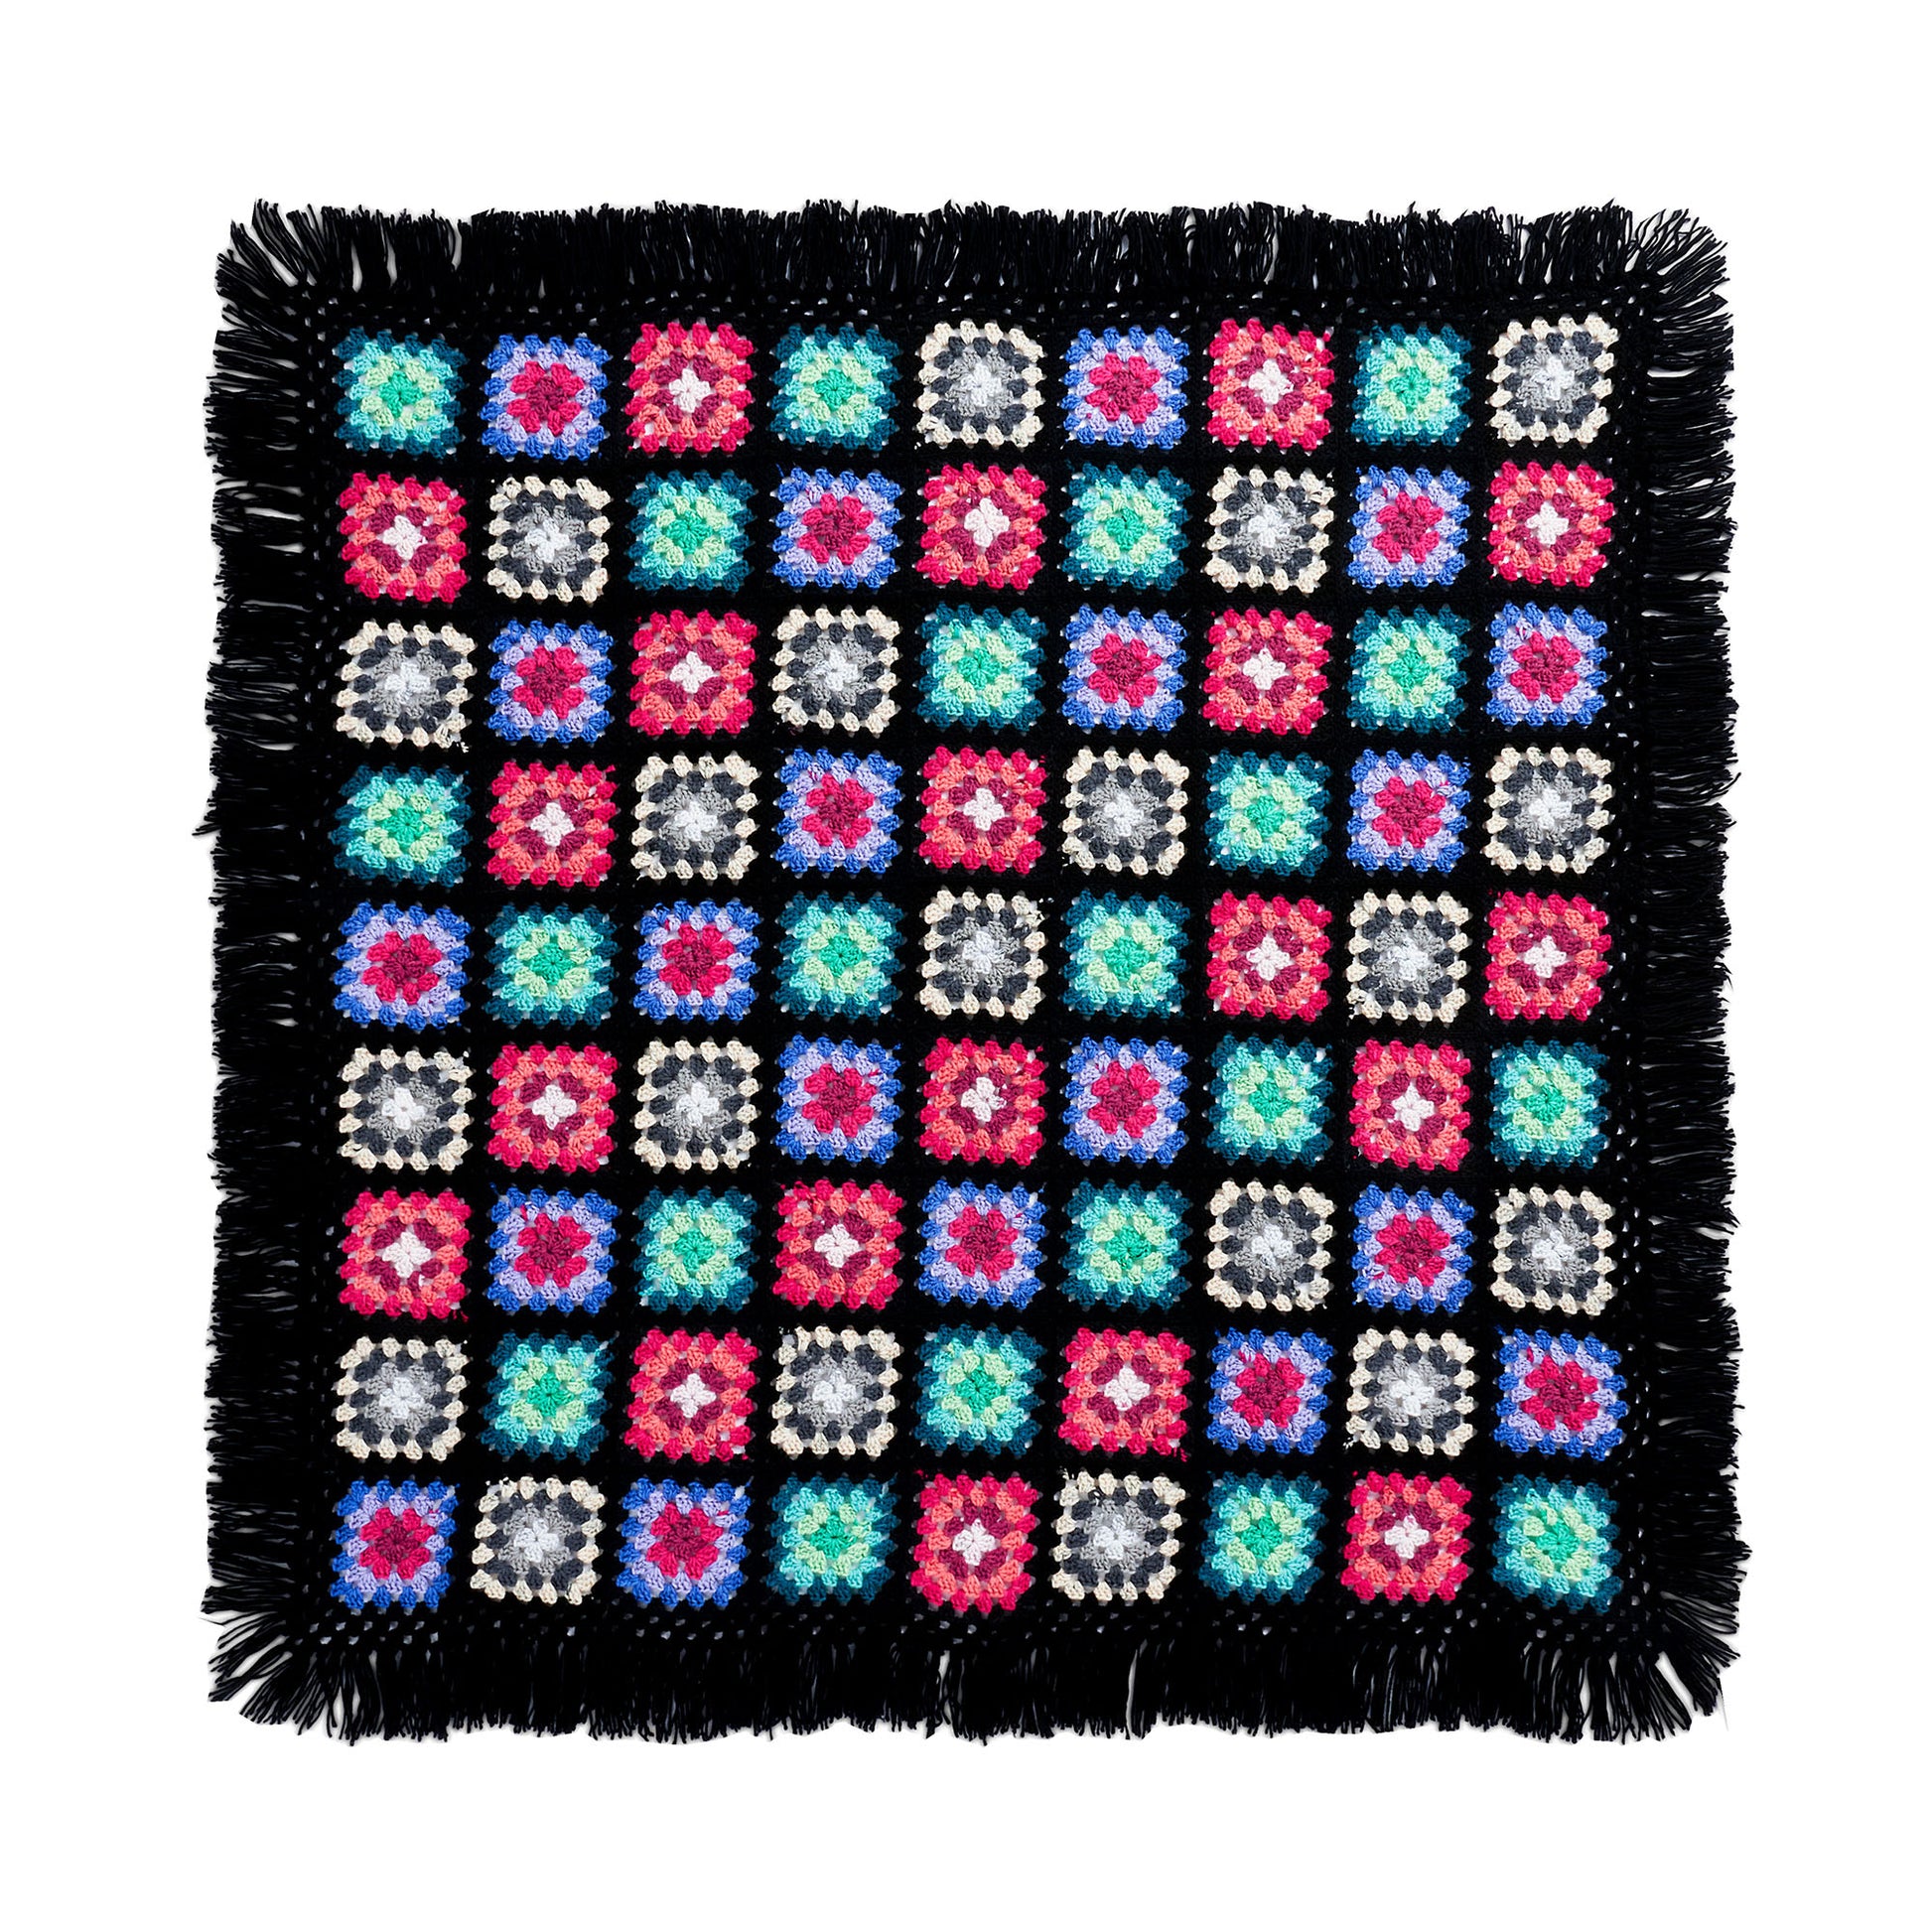 Free Red Heart Fiesta Fringe Crochet Granny Square Blanket Pattern